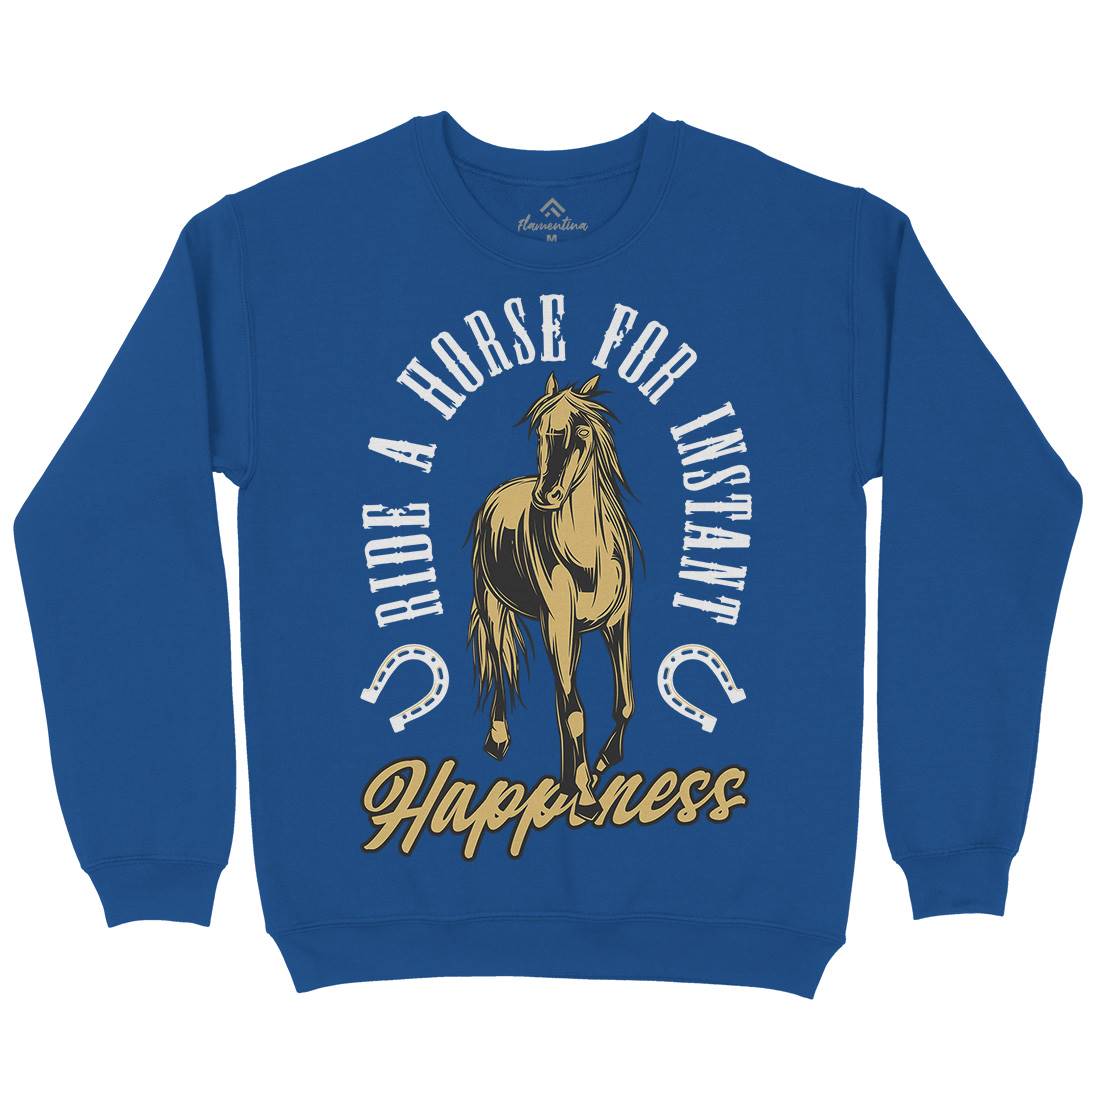 Happiness Kids Crew Neck Sweatshirt Animals C856